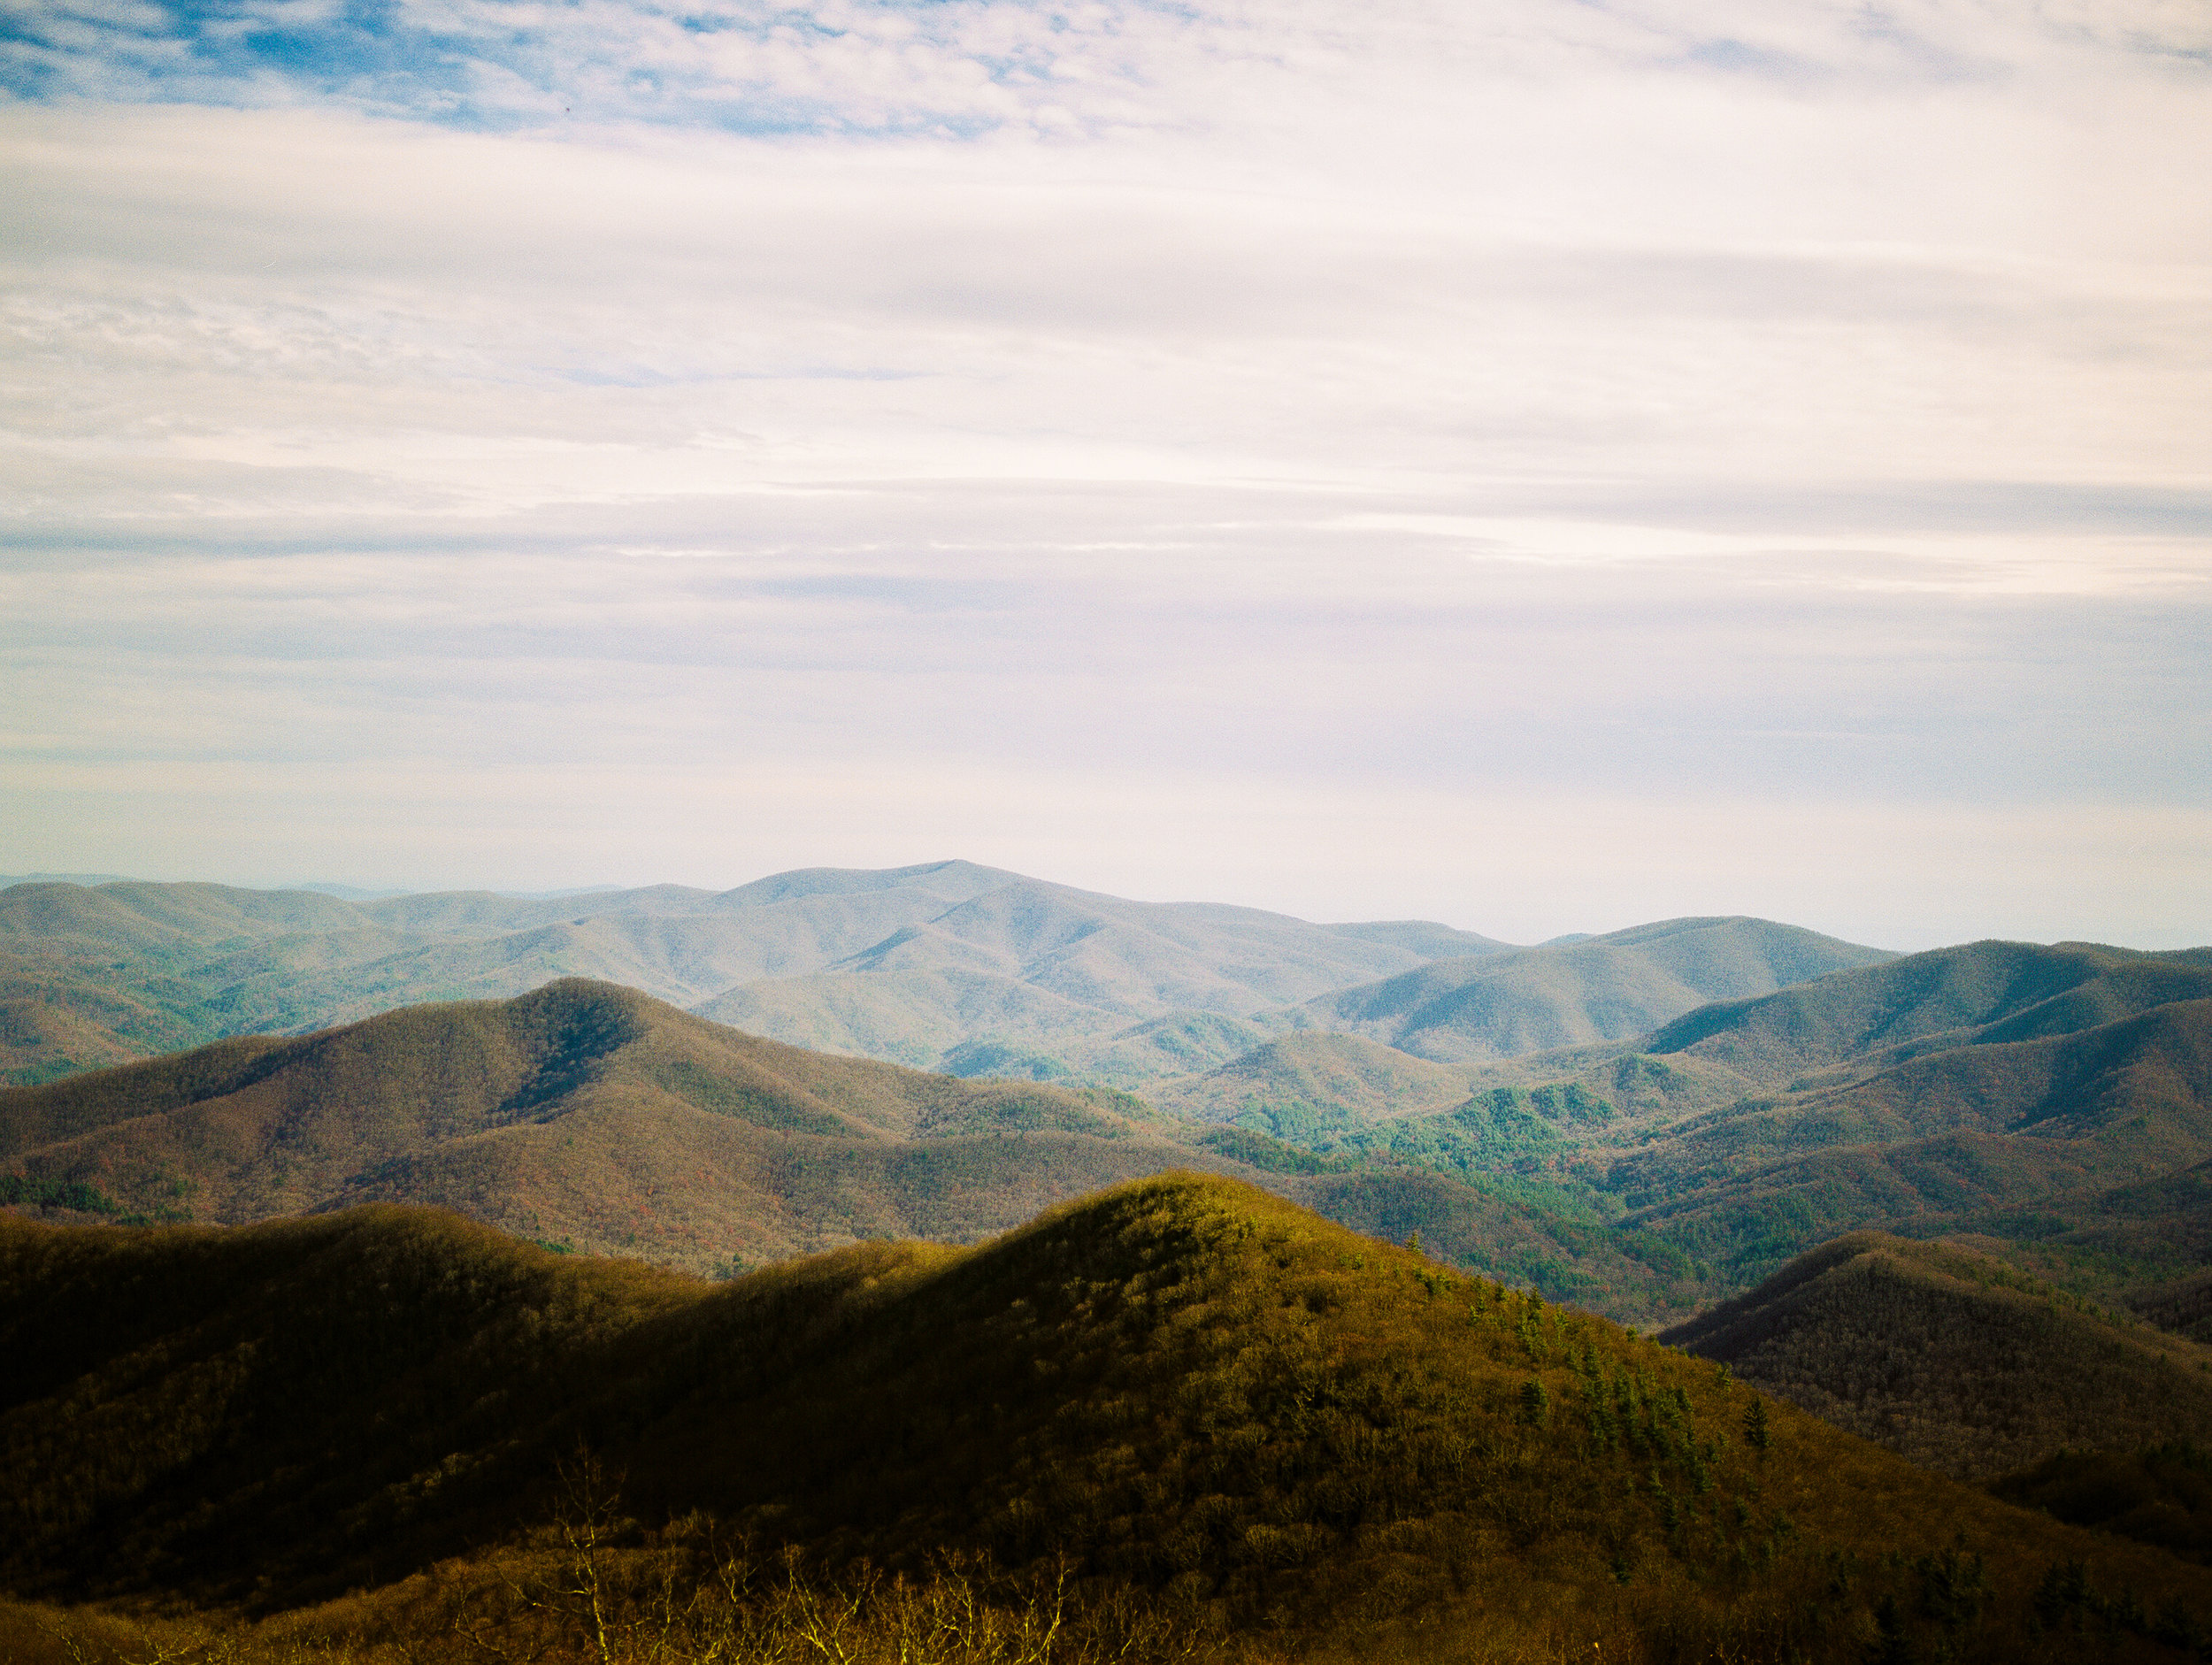 north-georgia-hiawasse-appalachian-mountains-photos-003.jpg